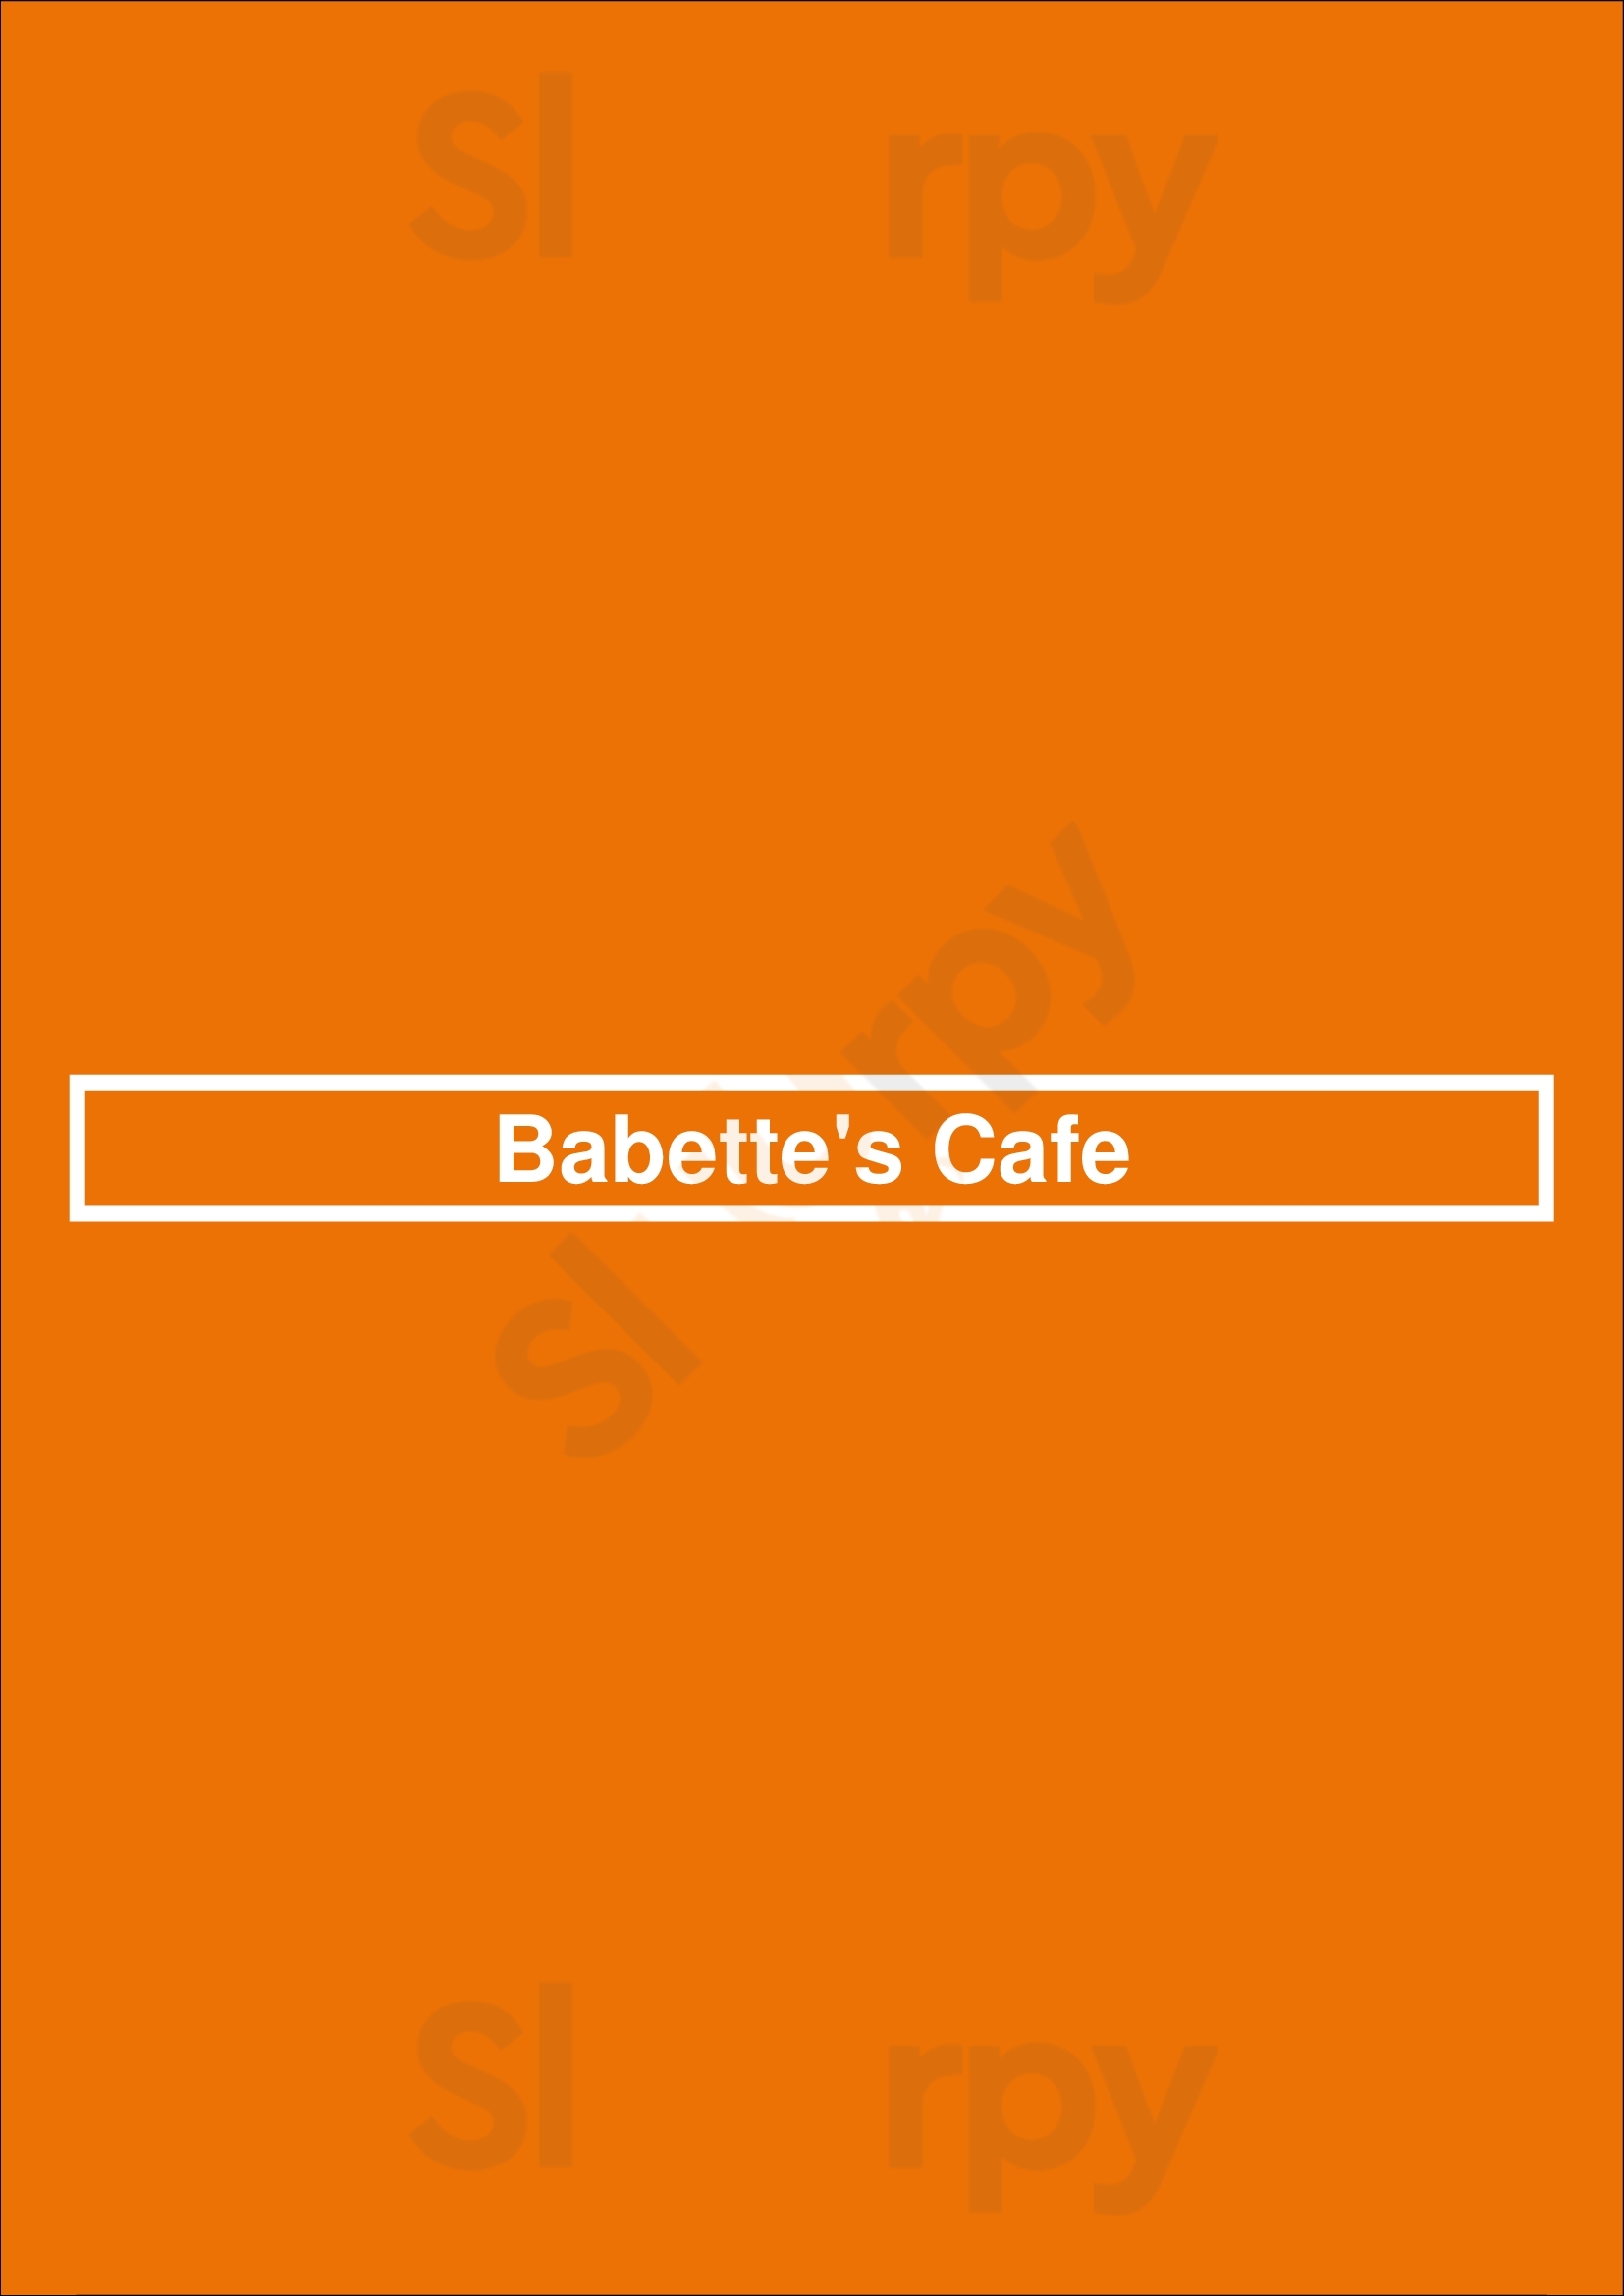 Babette's Cafe Atlanta Menu - 1